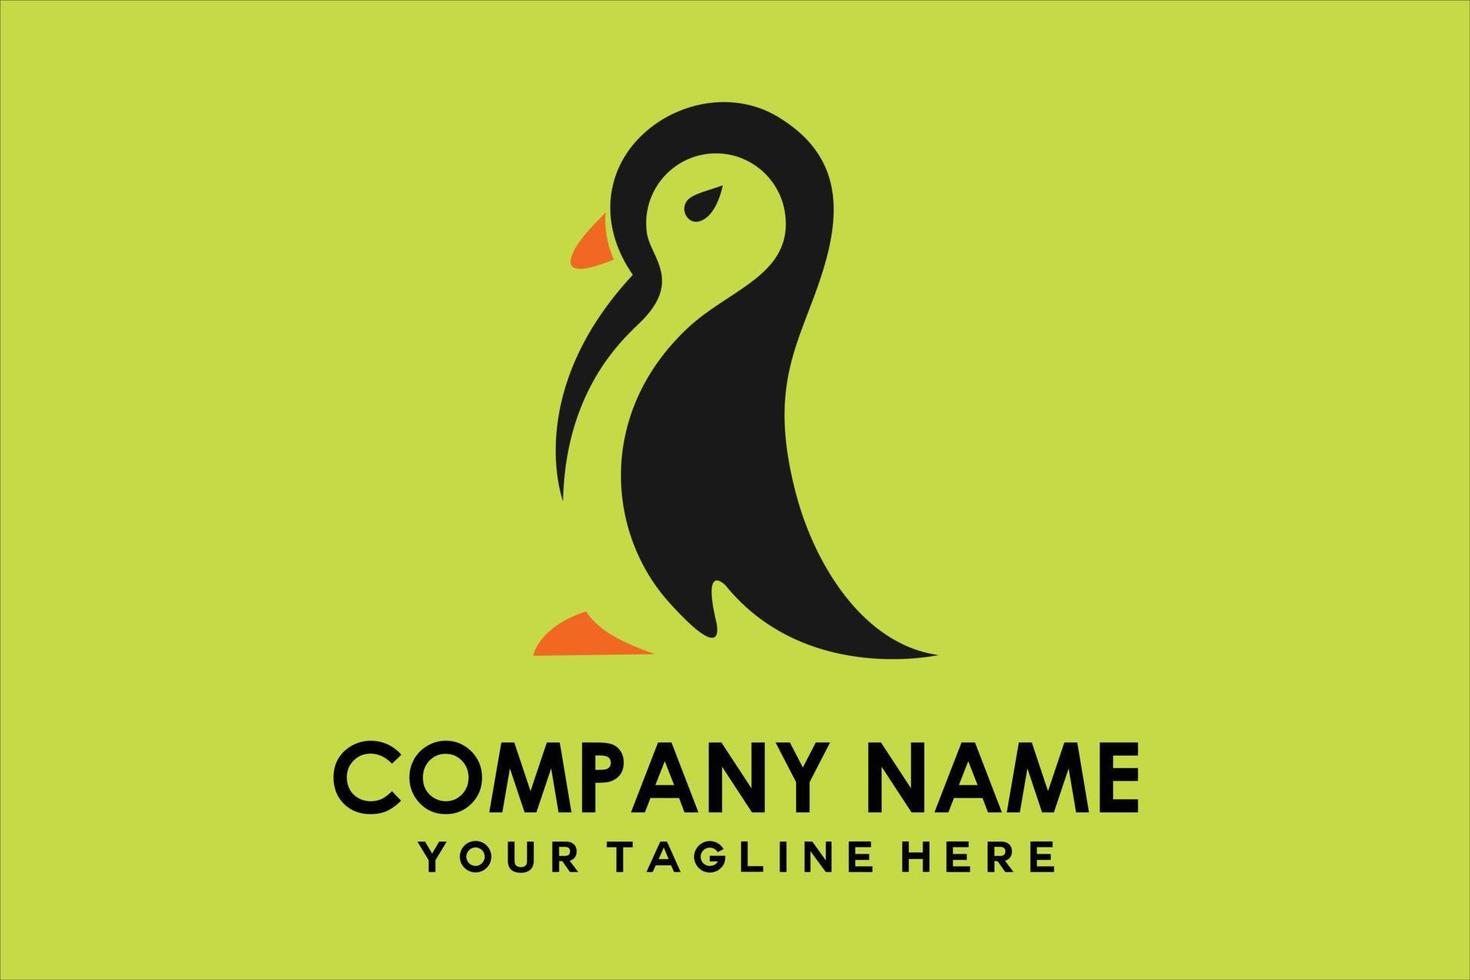 vetor do logotipo do animal pinguim